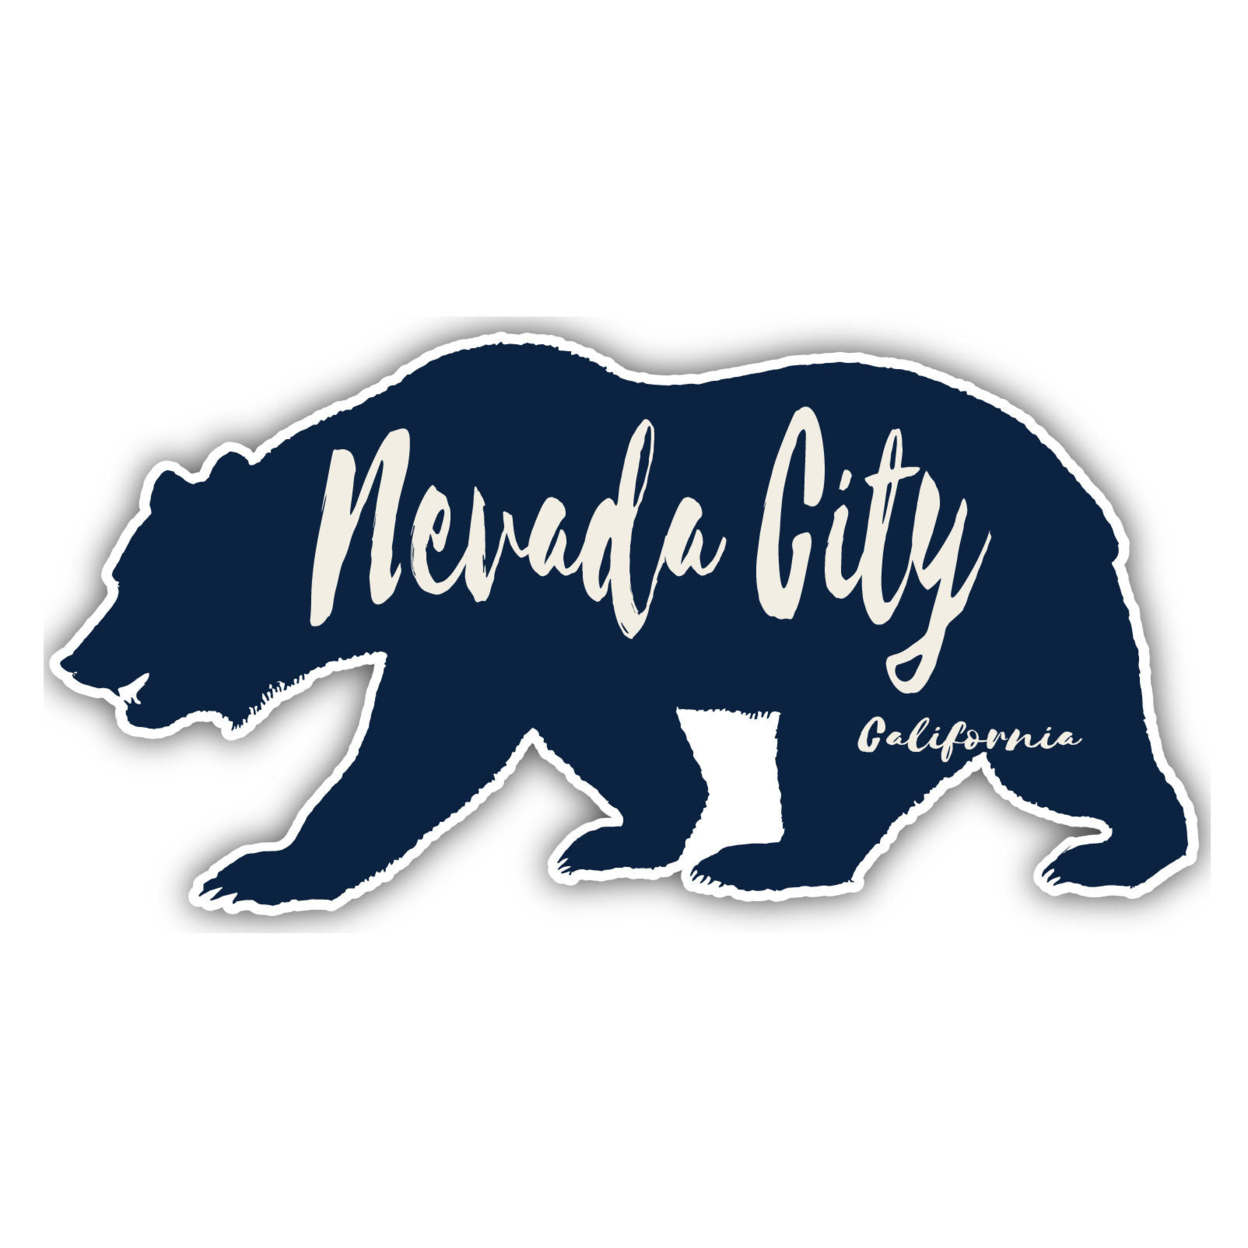 Nevada City California Souvenir Decorative Stickers (Choose Theme And Size) - Single Unit, 4-Inch, Bear